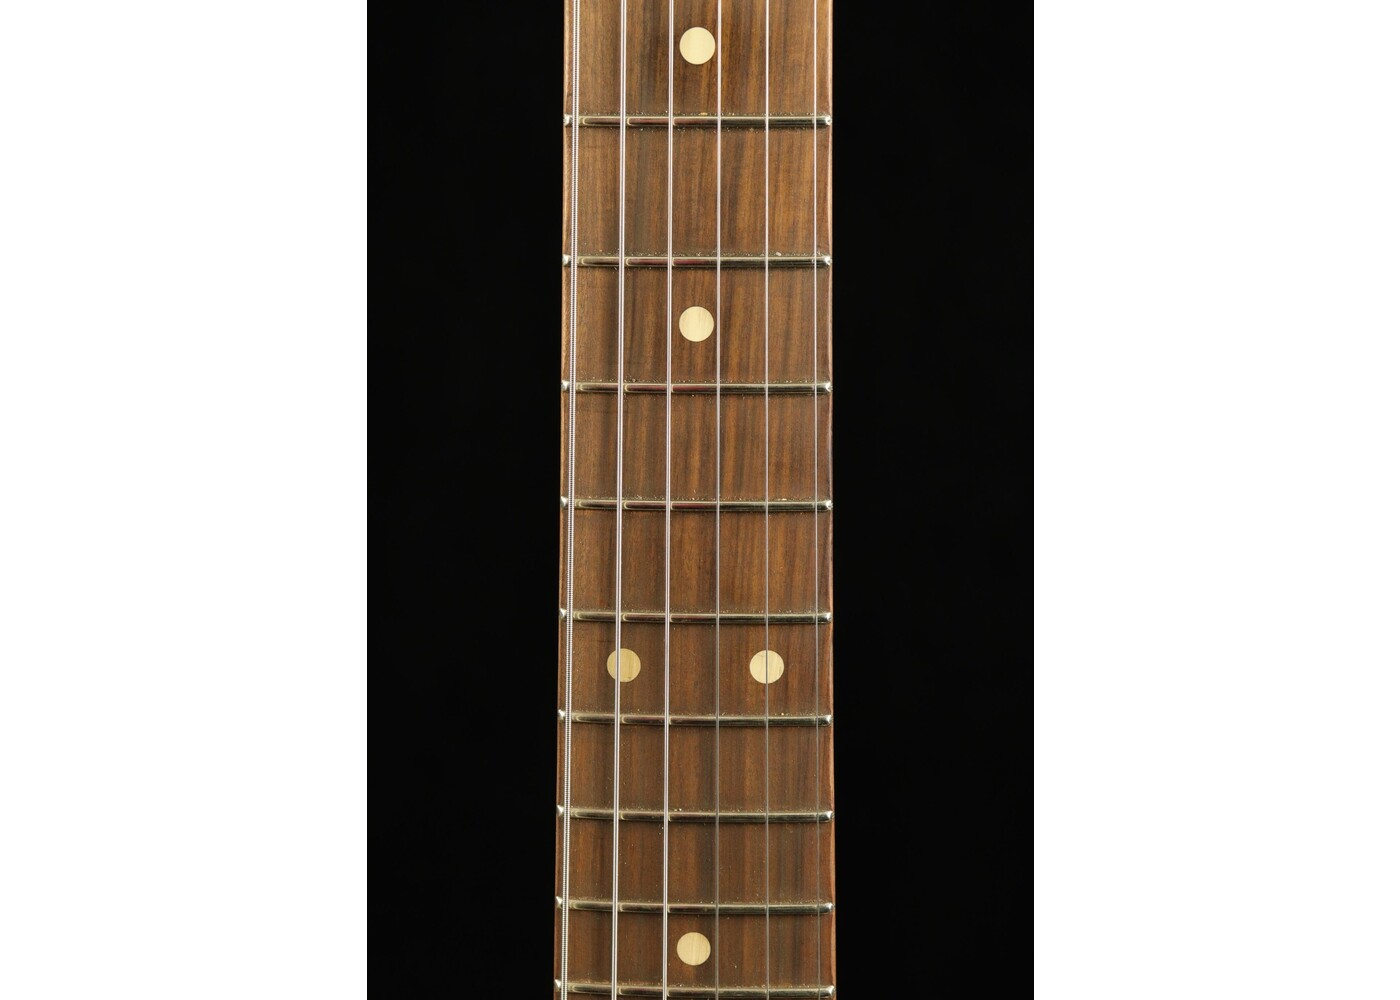 Fender Fender Vintera Road Worn 60's Stratocaster - Firemist Gold